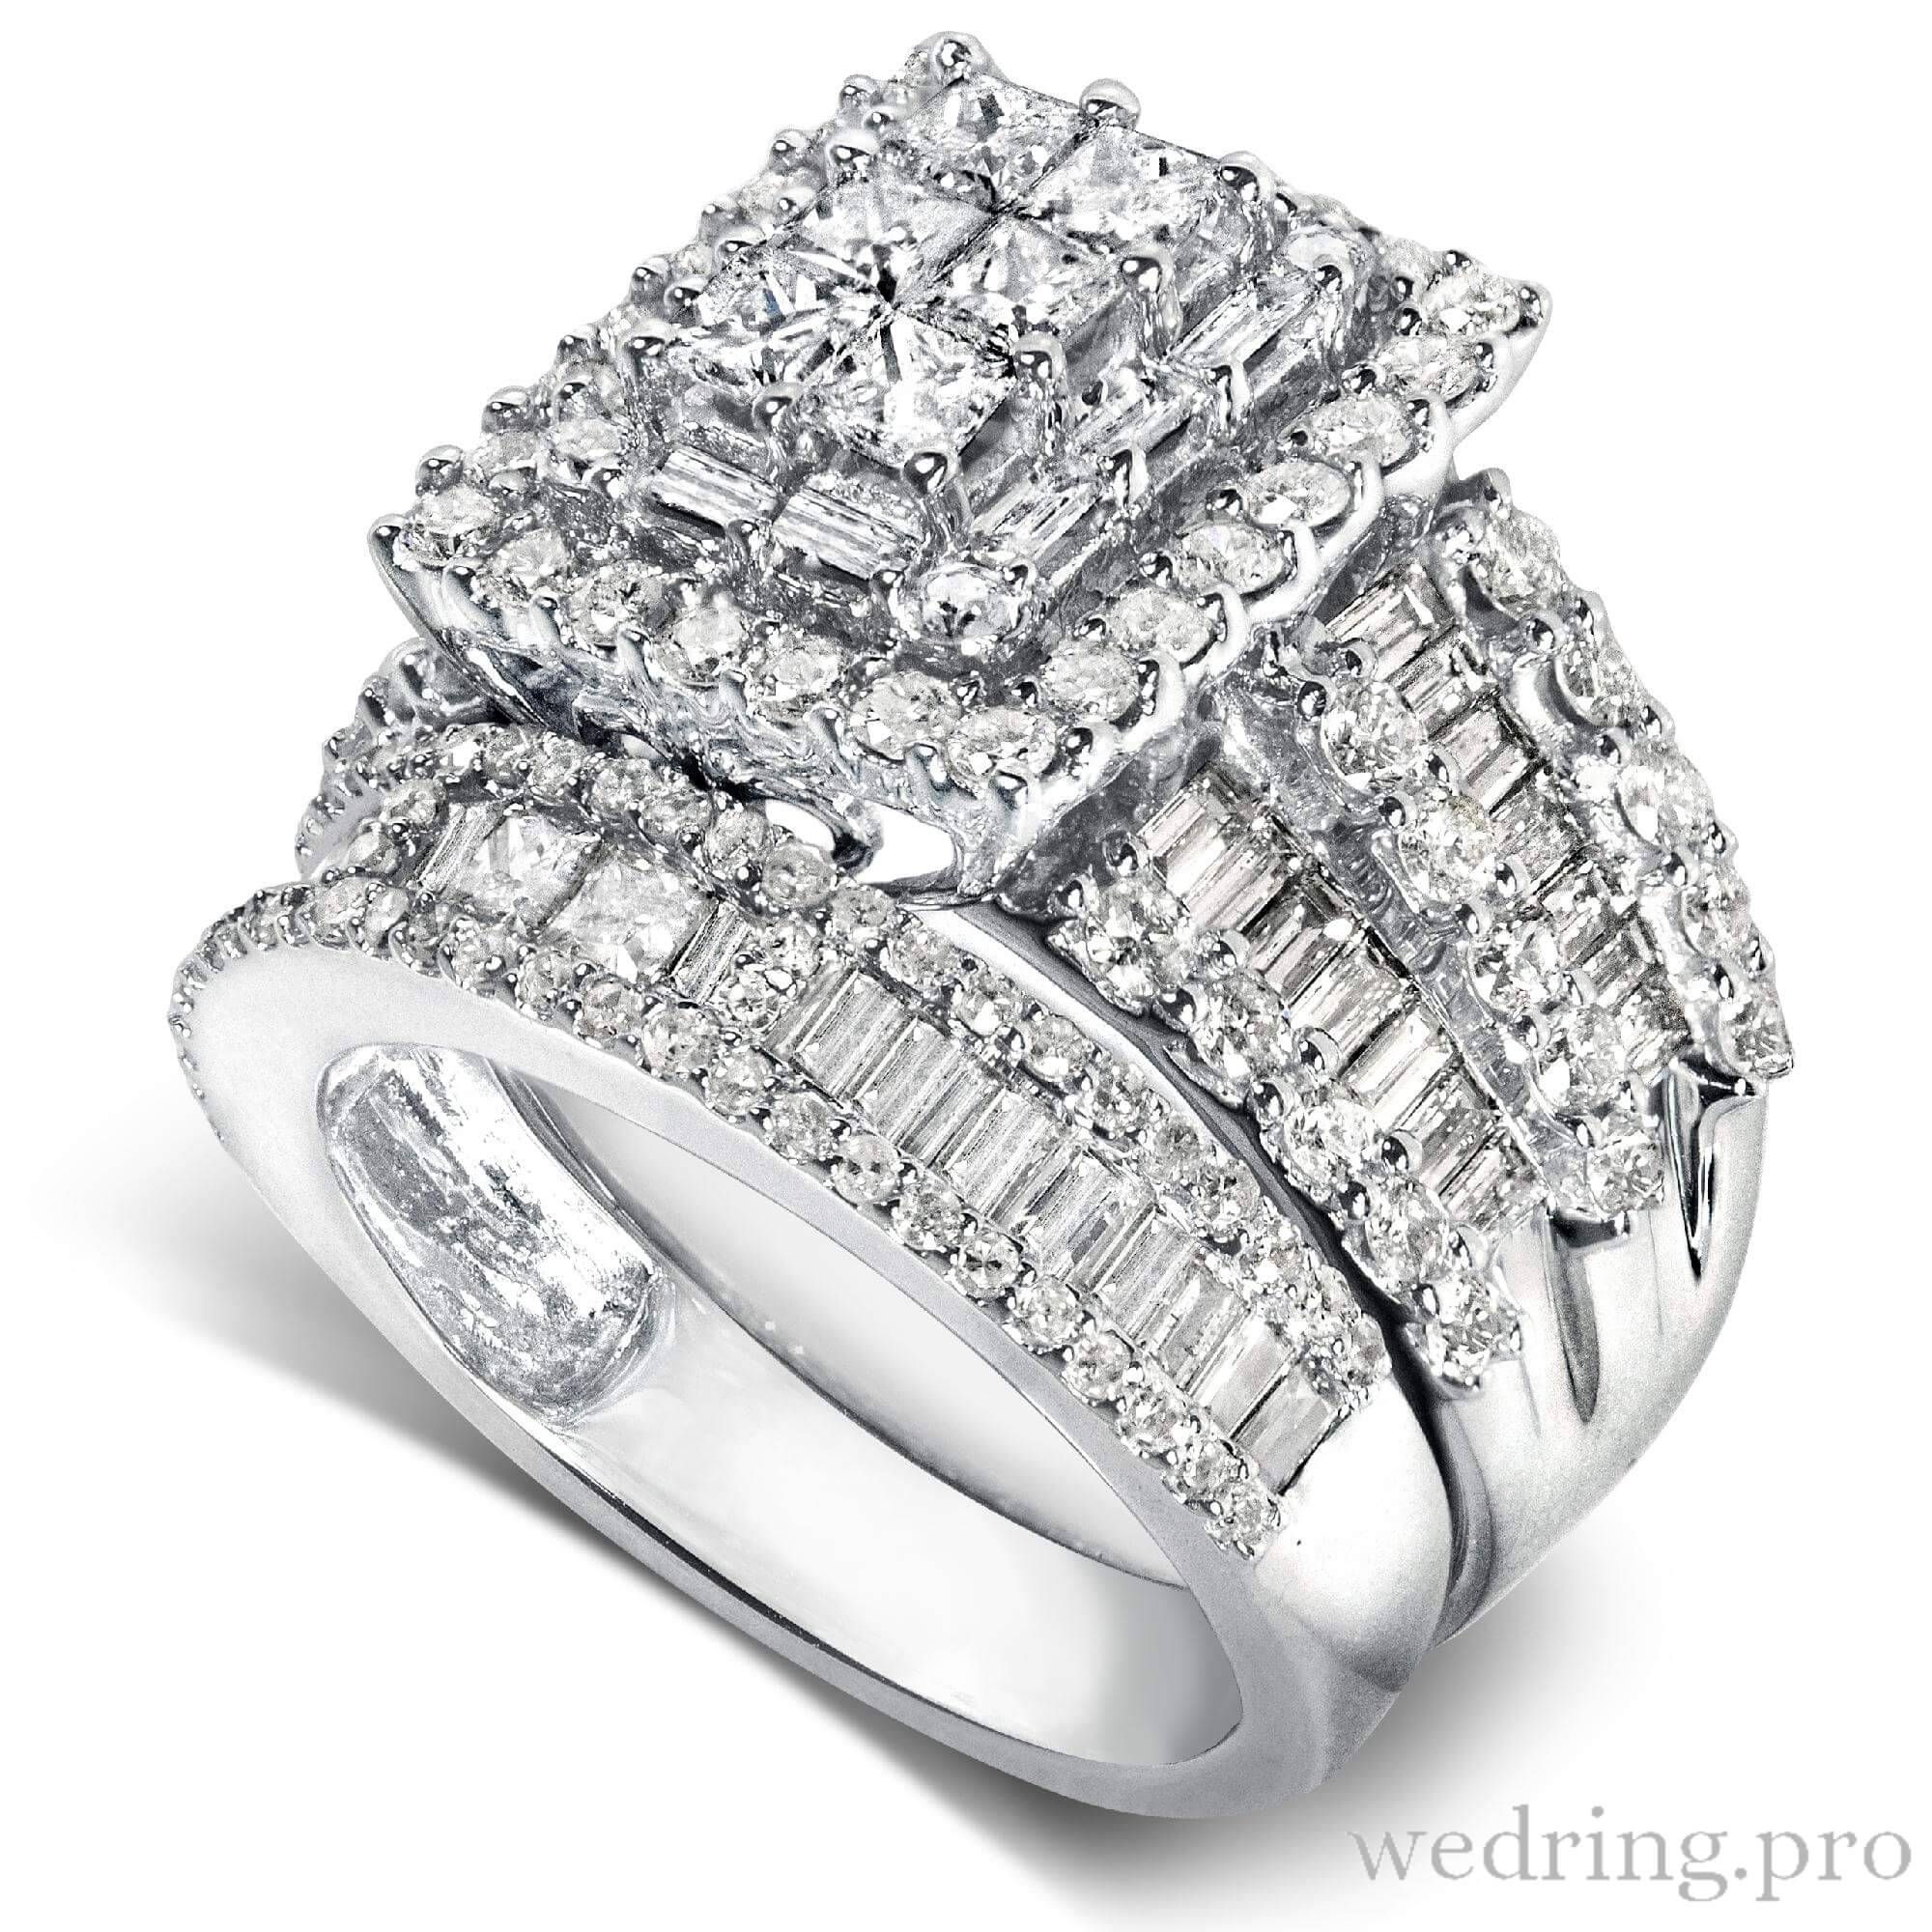 Superman Wedding Band Tags : Music Wedding Ring Jewelry Wedding With Jewelry Wedding Bands (View 4 of 15)